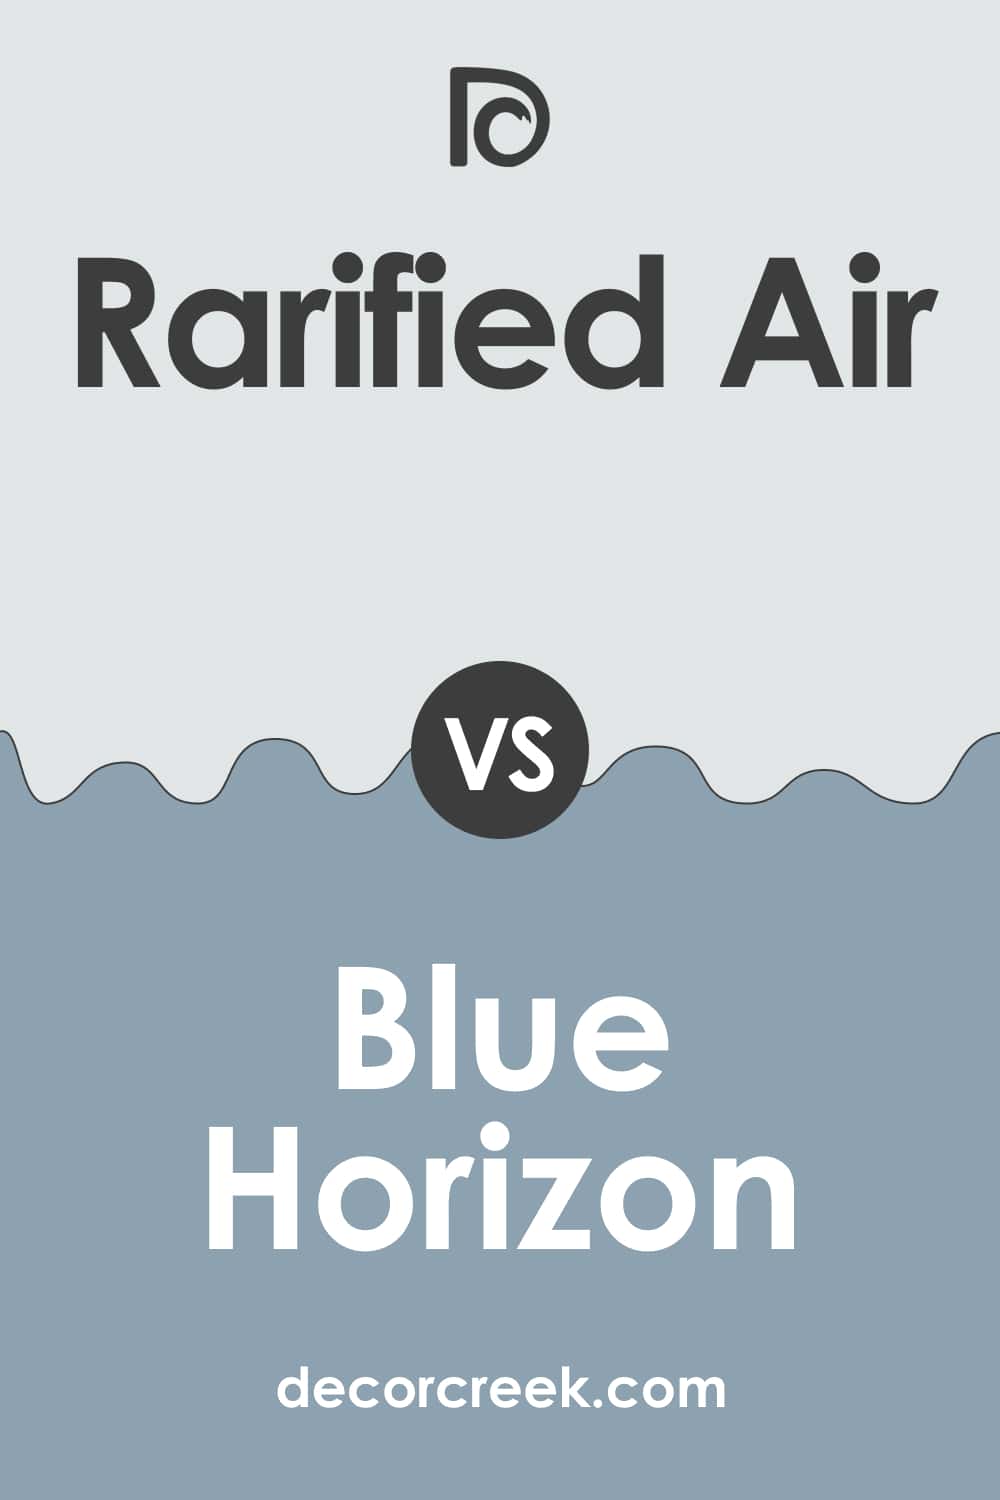 Rarified Air vs Blue Horizon